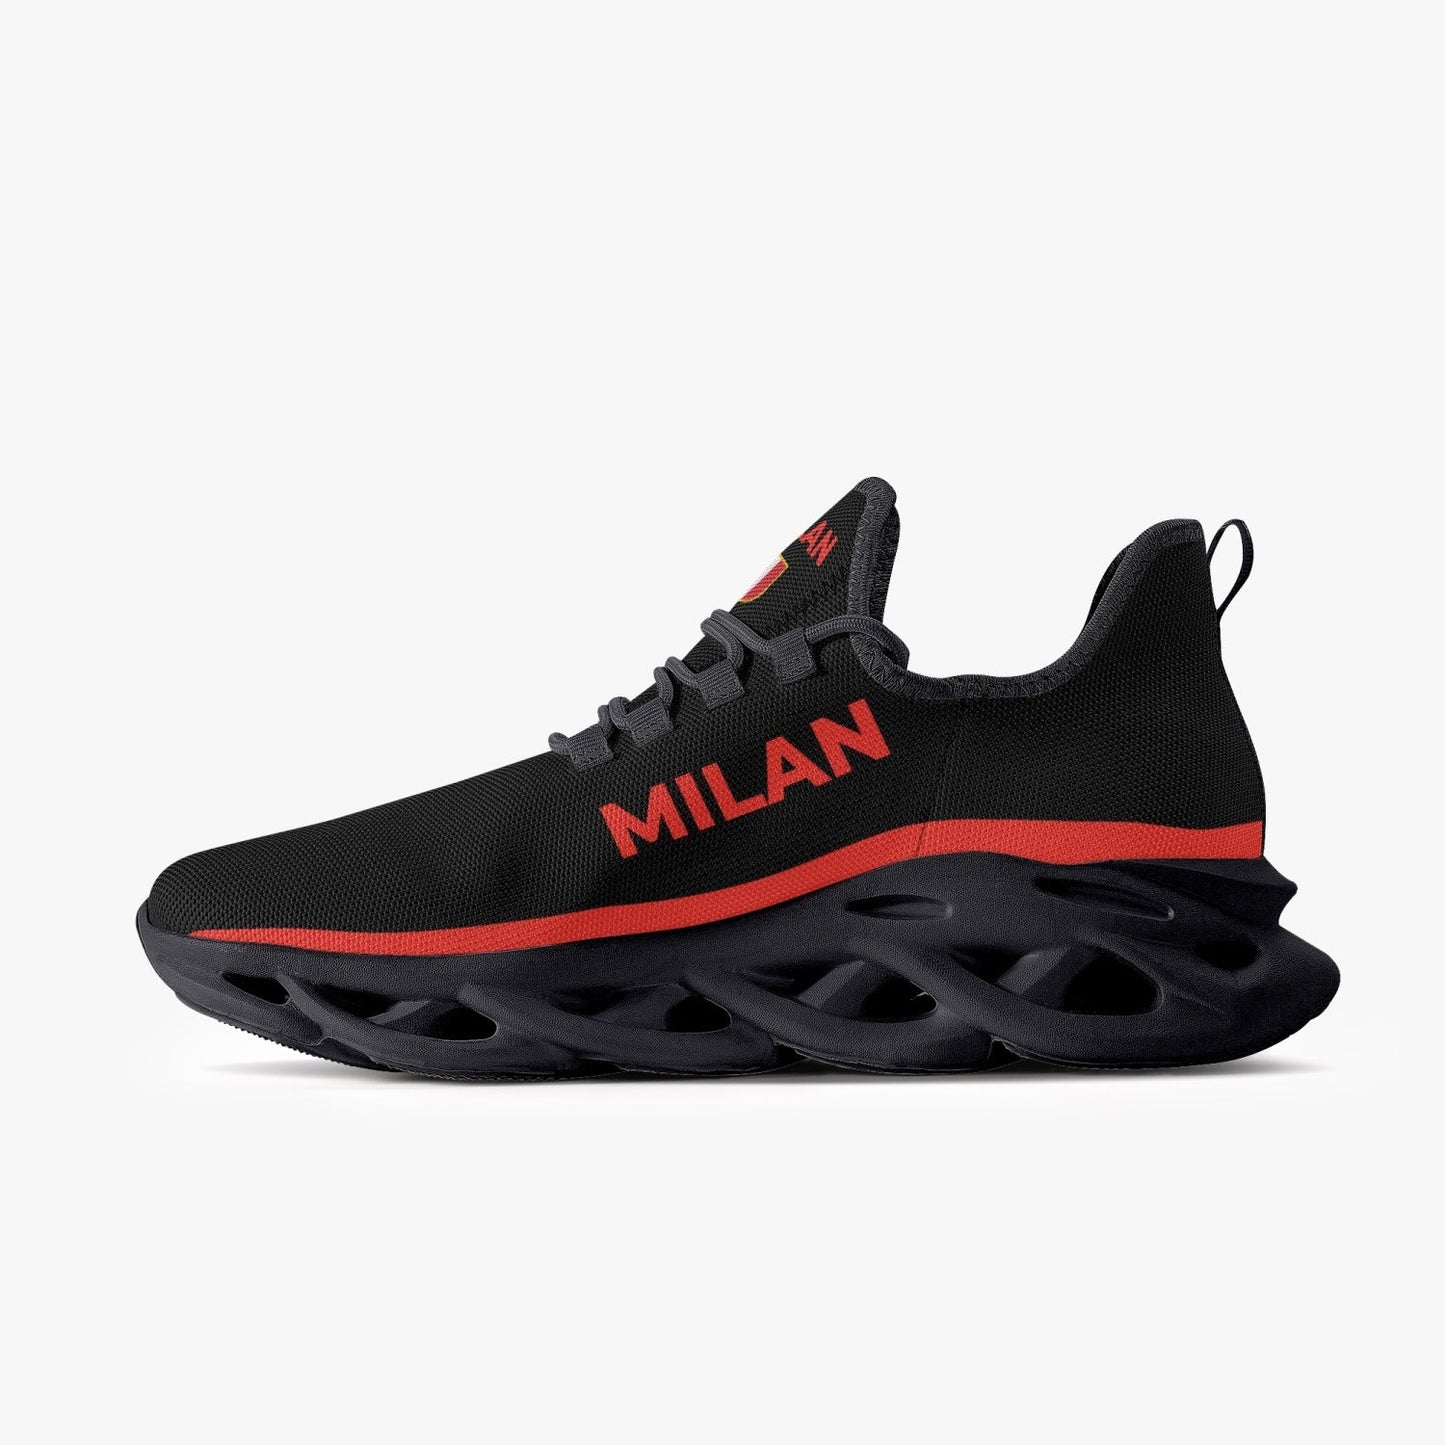 Sneakers - Milan Air+ - uomo